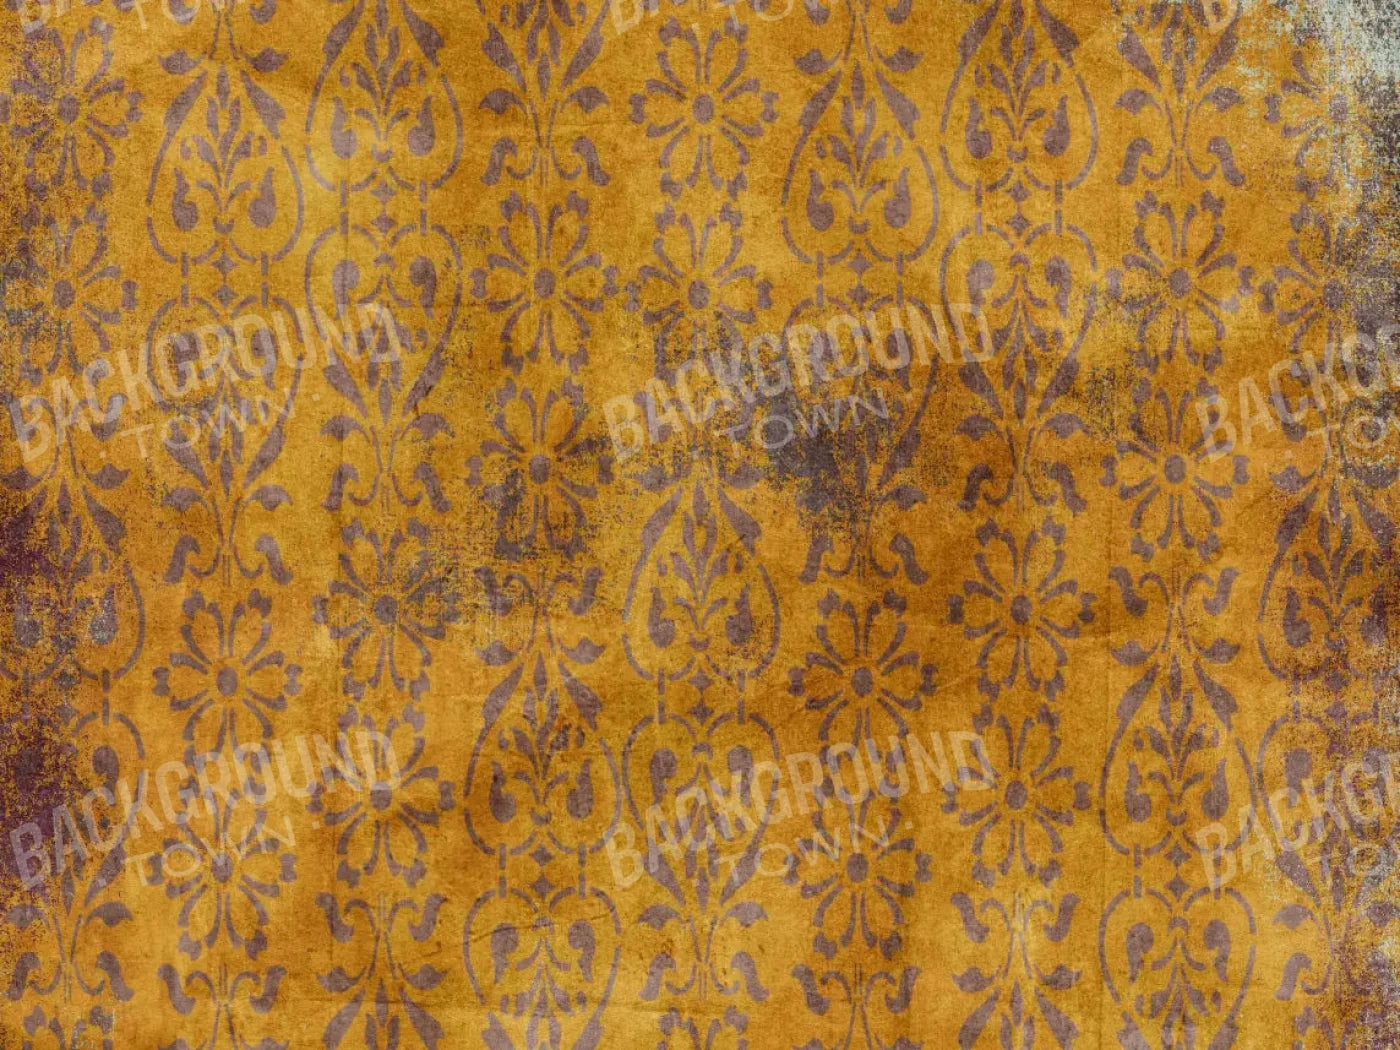 Golden Harvest 10X8 Fleece ( 120 X 96 Inch ) Backdrop